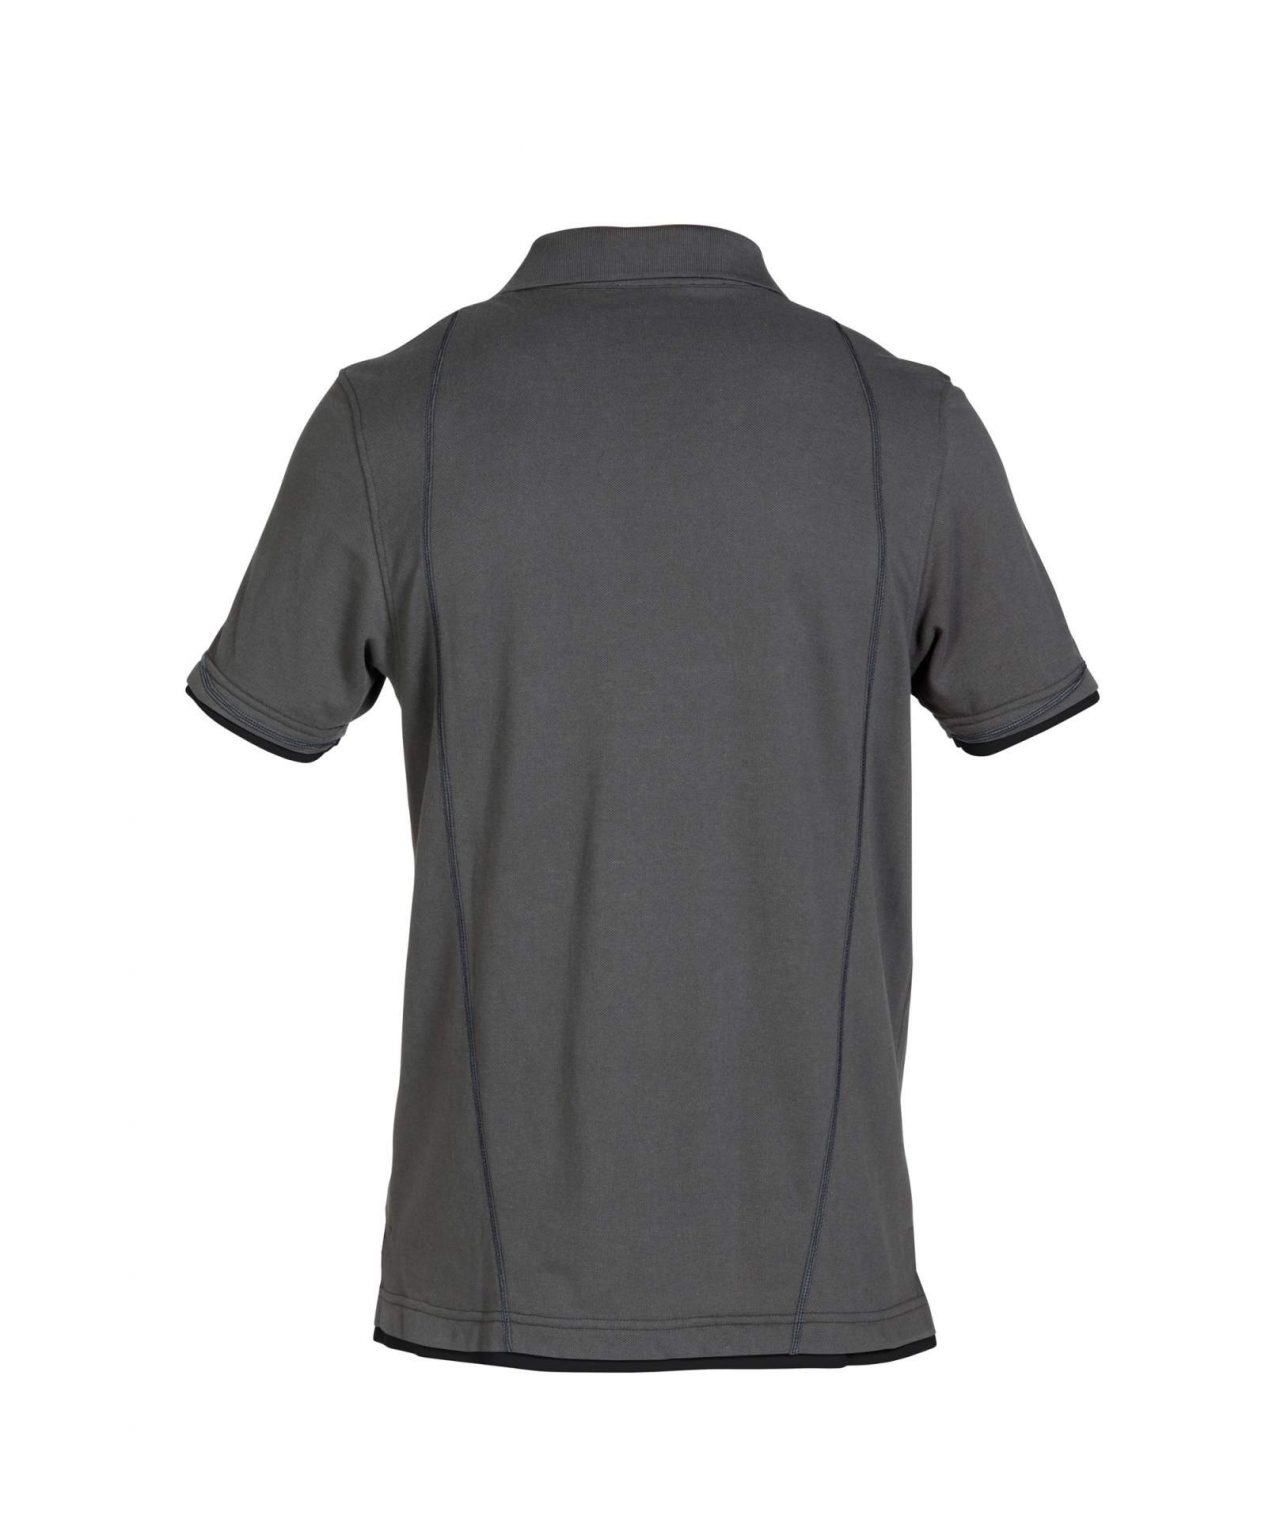 orbital polo shirt anthracite grey black back